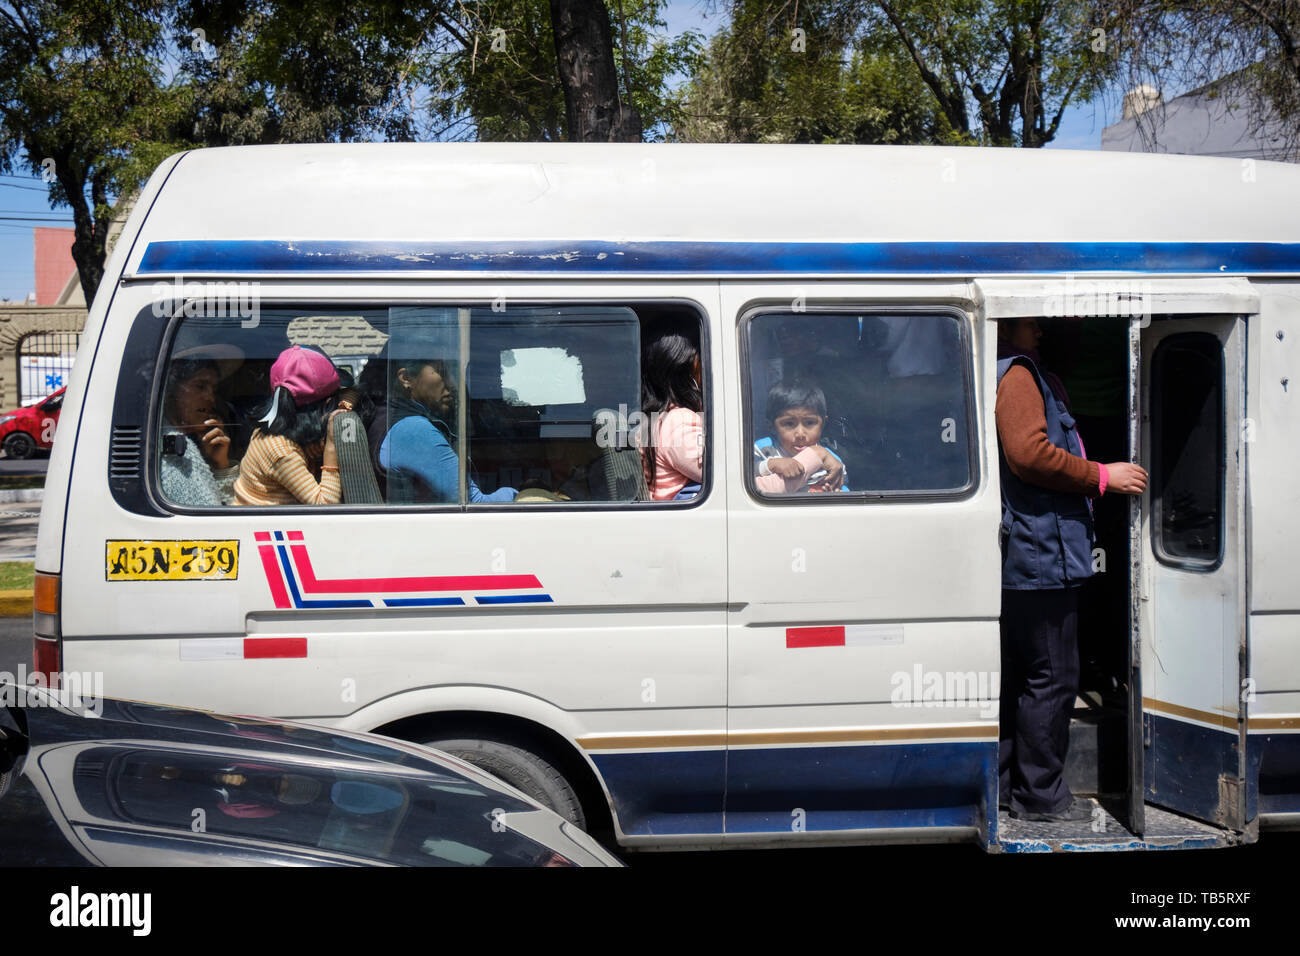 public-bus-or-colectivo-in-arequipa-peru-TB5RXF.jpg